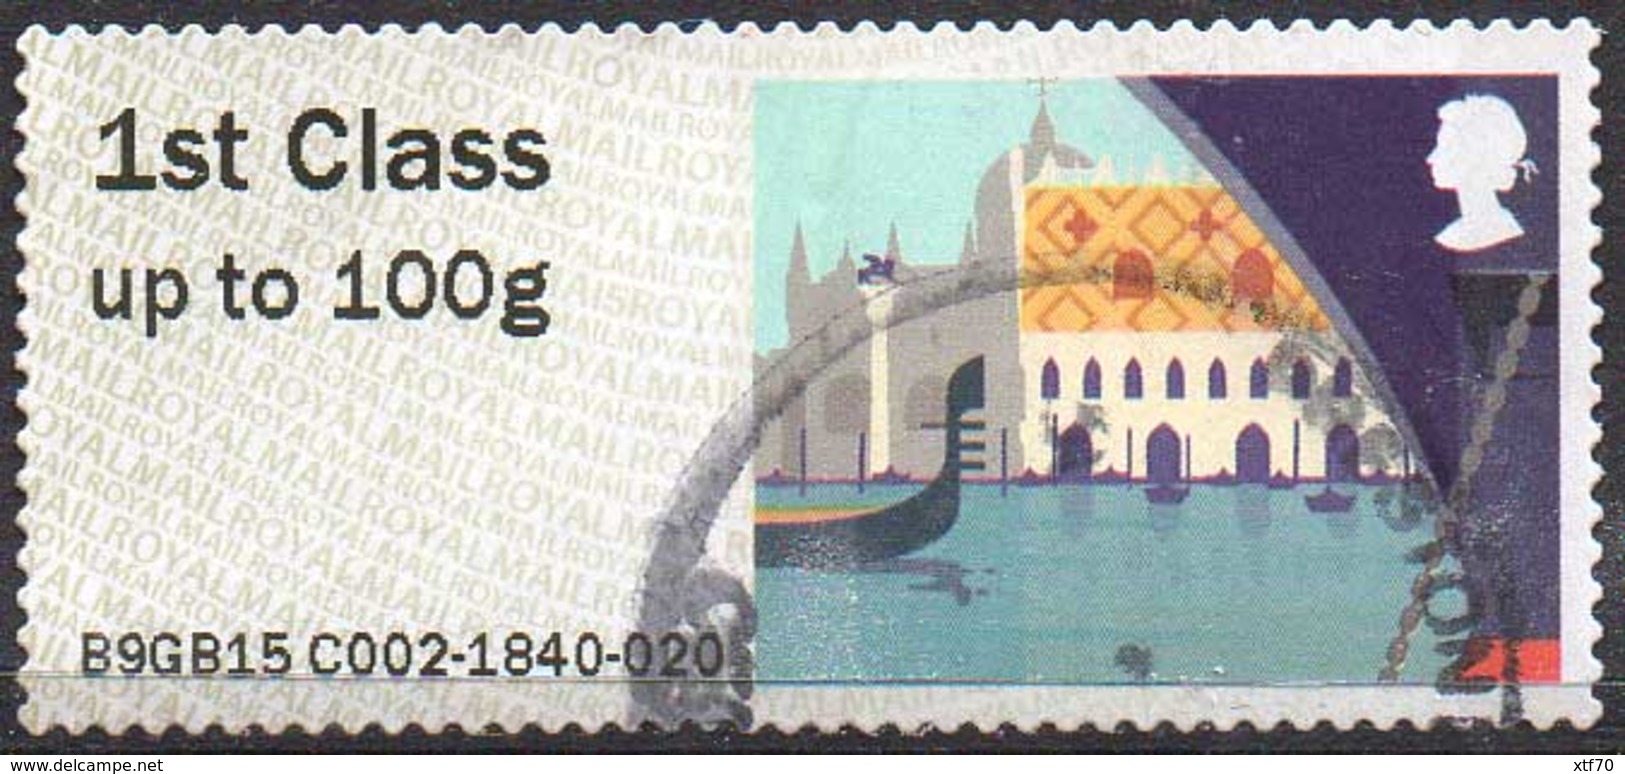 GREAT BRITAIN 2015 Post & Go: Sea Travel. Venice - Post & Go Stamps